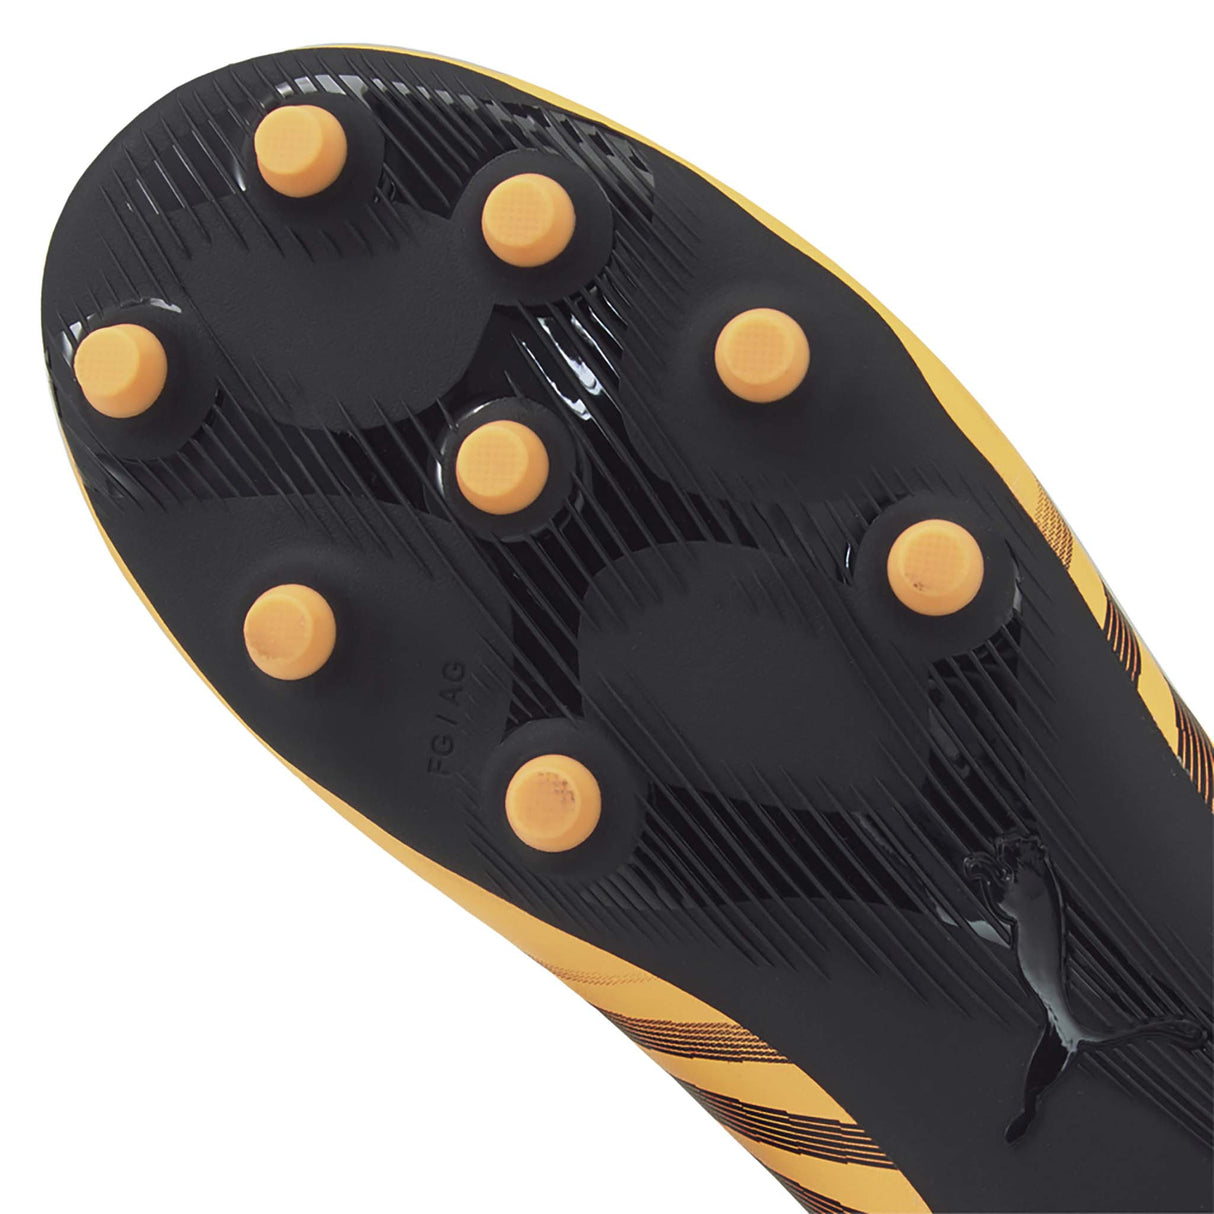 Puma Tacto II FG/AG Junior souliers soccer crampons orange noir enfant details